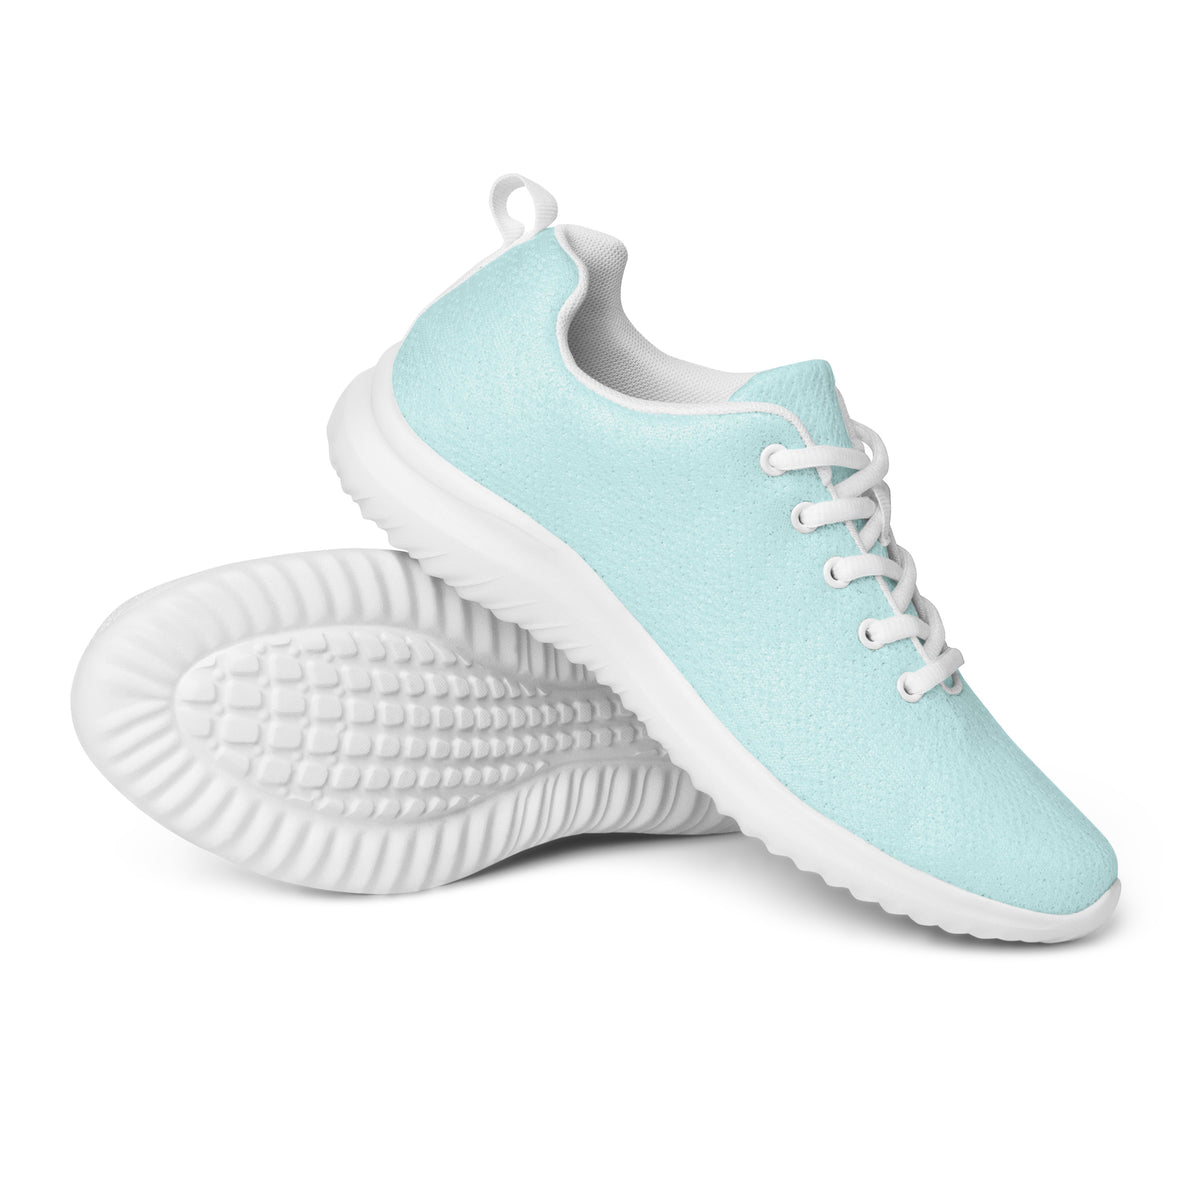 NOGA Women's Sports Shoes - POWDER BLUE